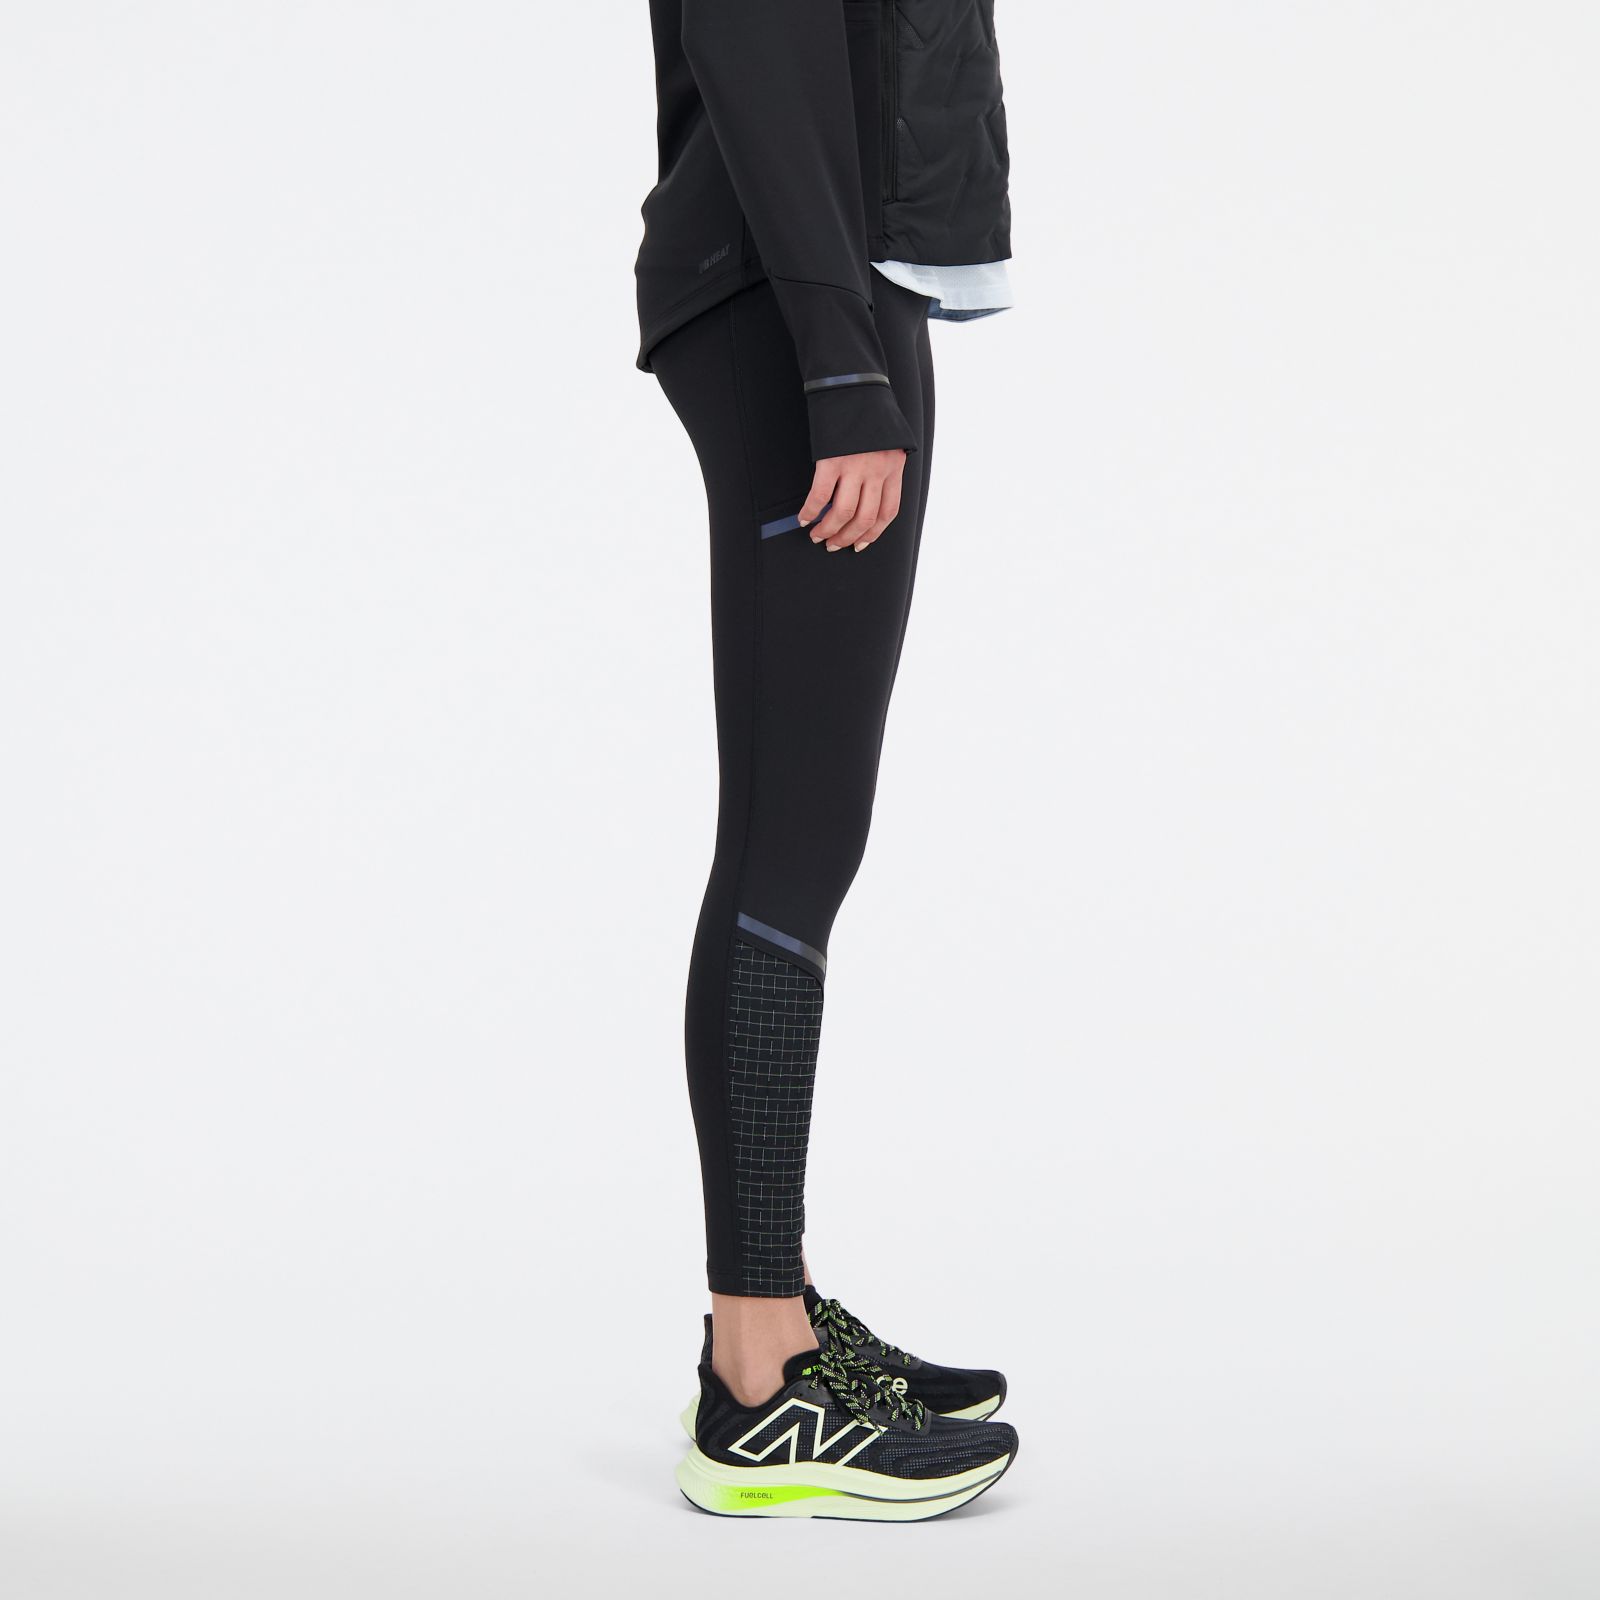 New Balance Women's Running Tights & Leggings